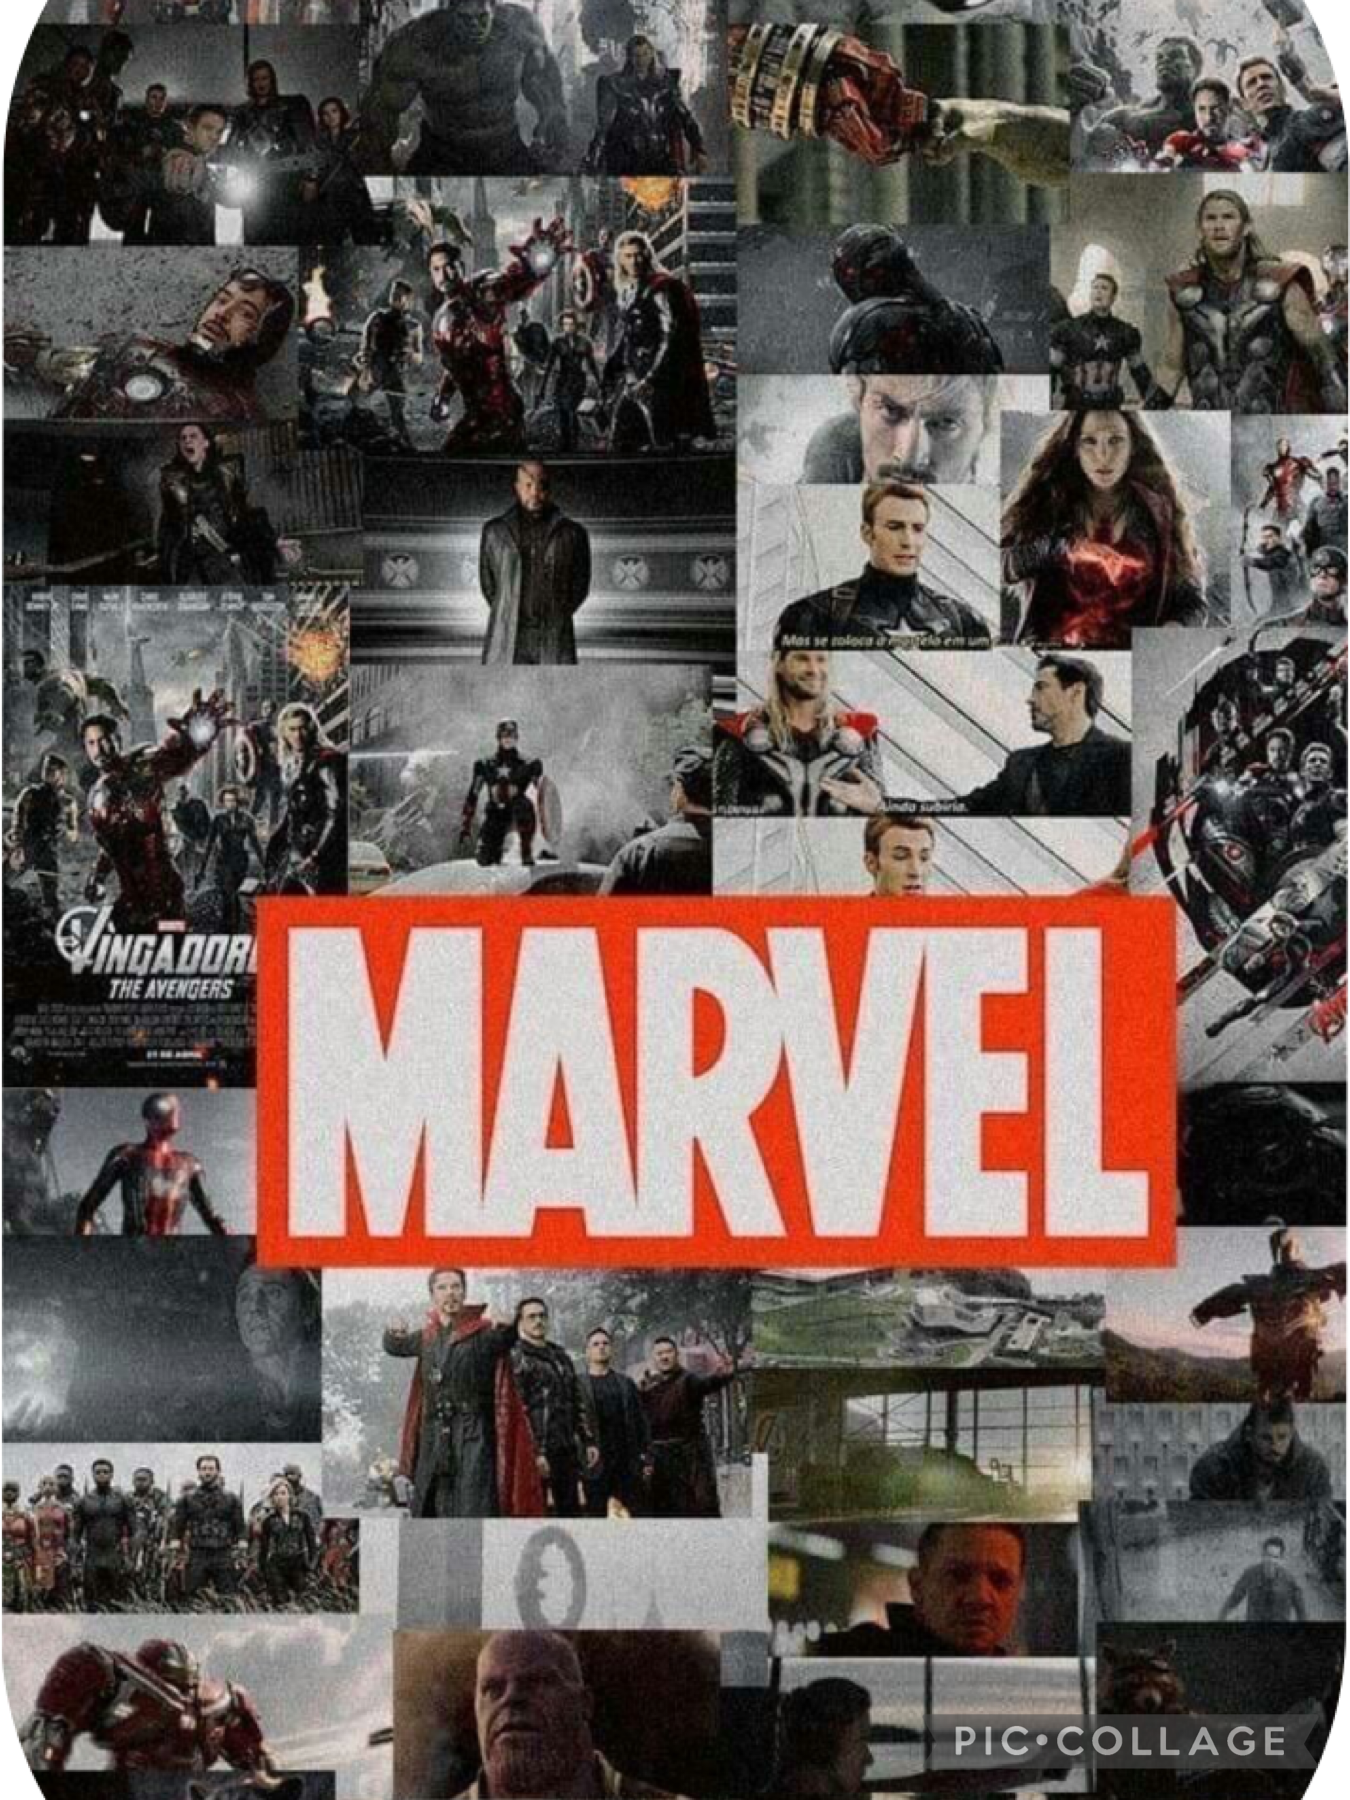 Marvel cause I’m obsessed 